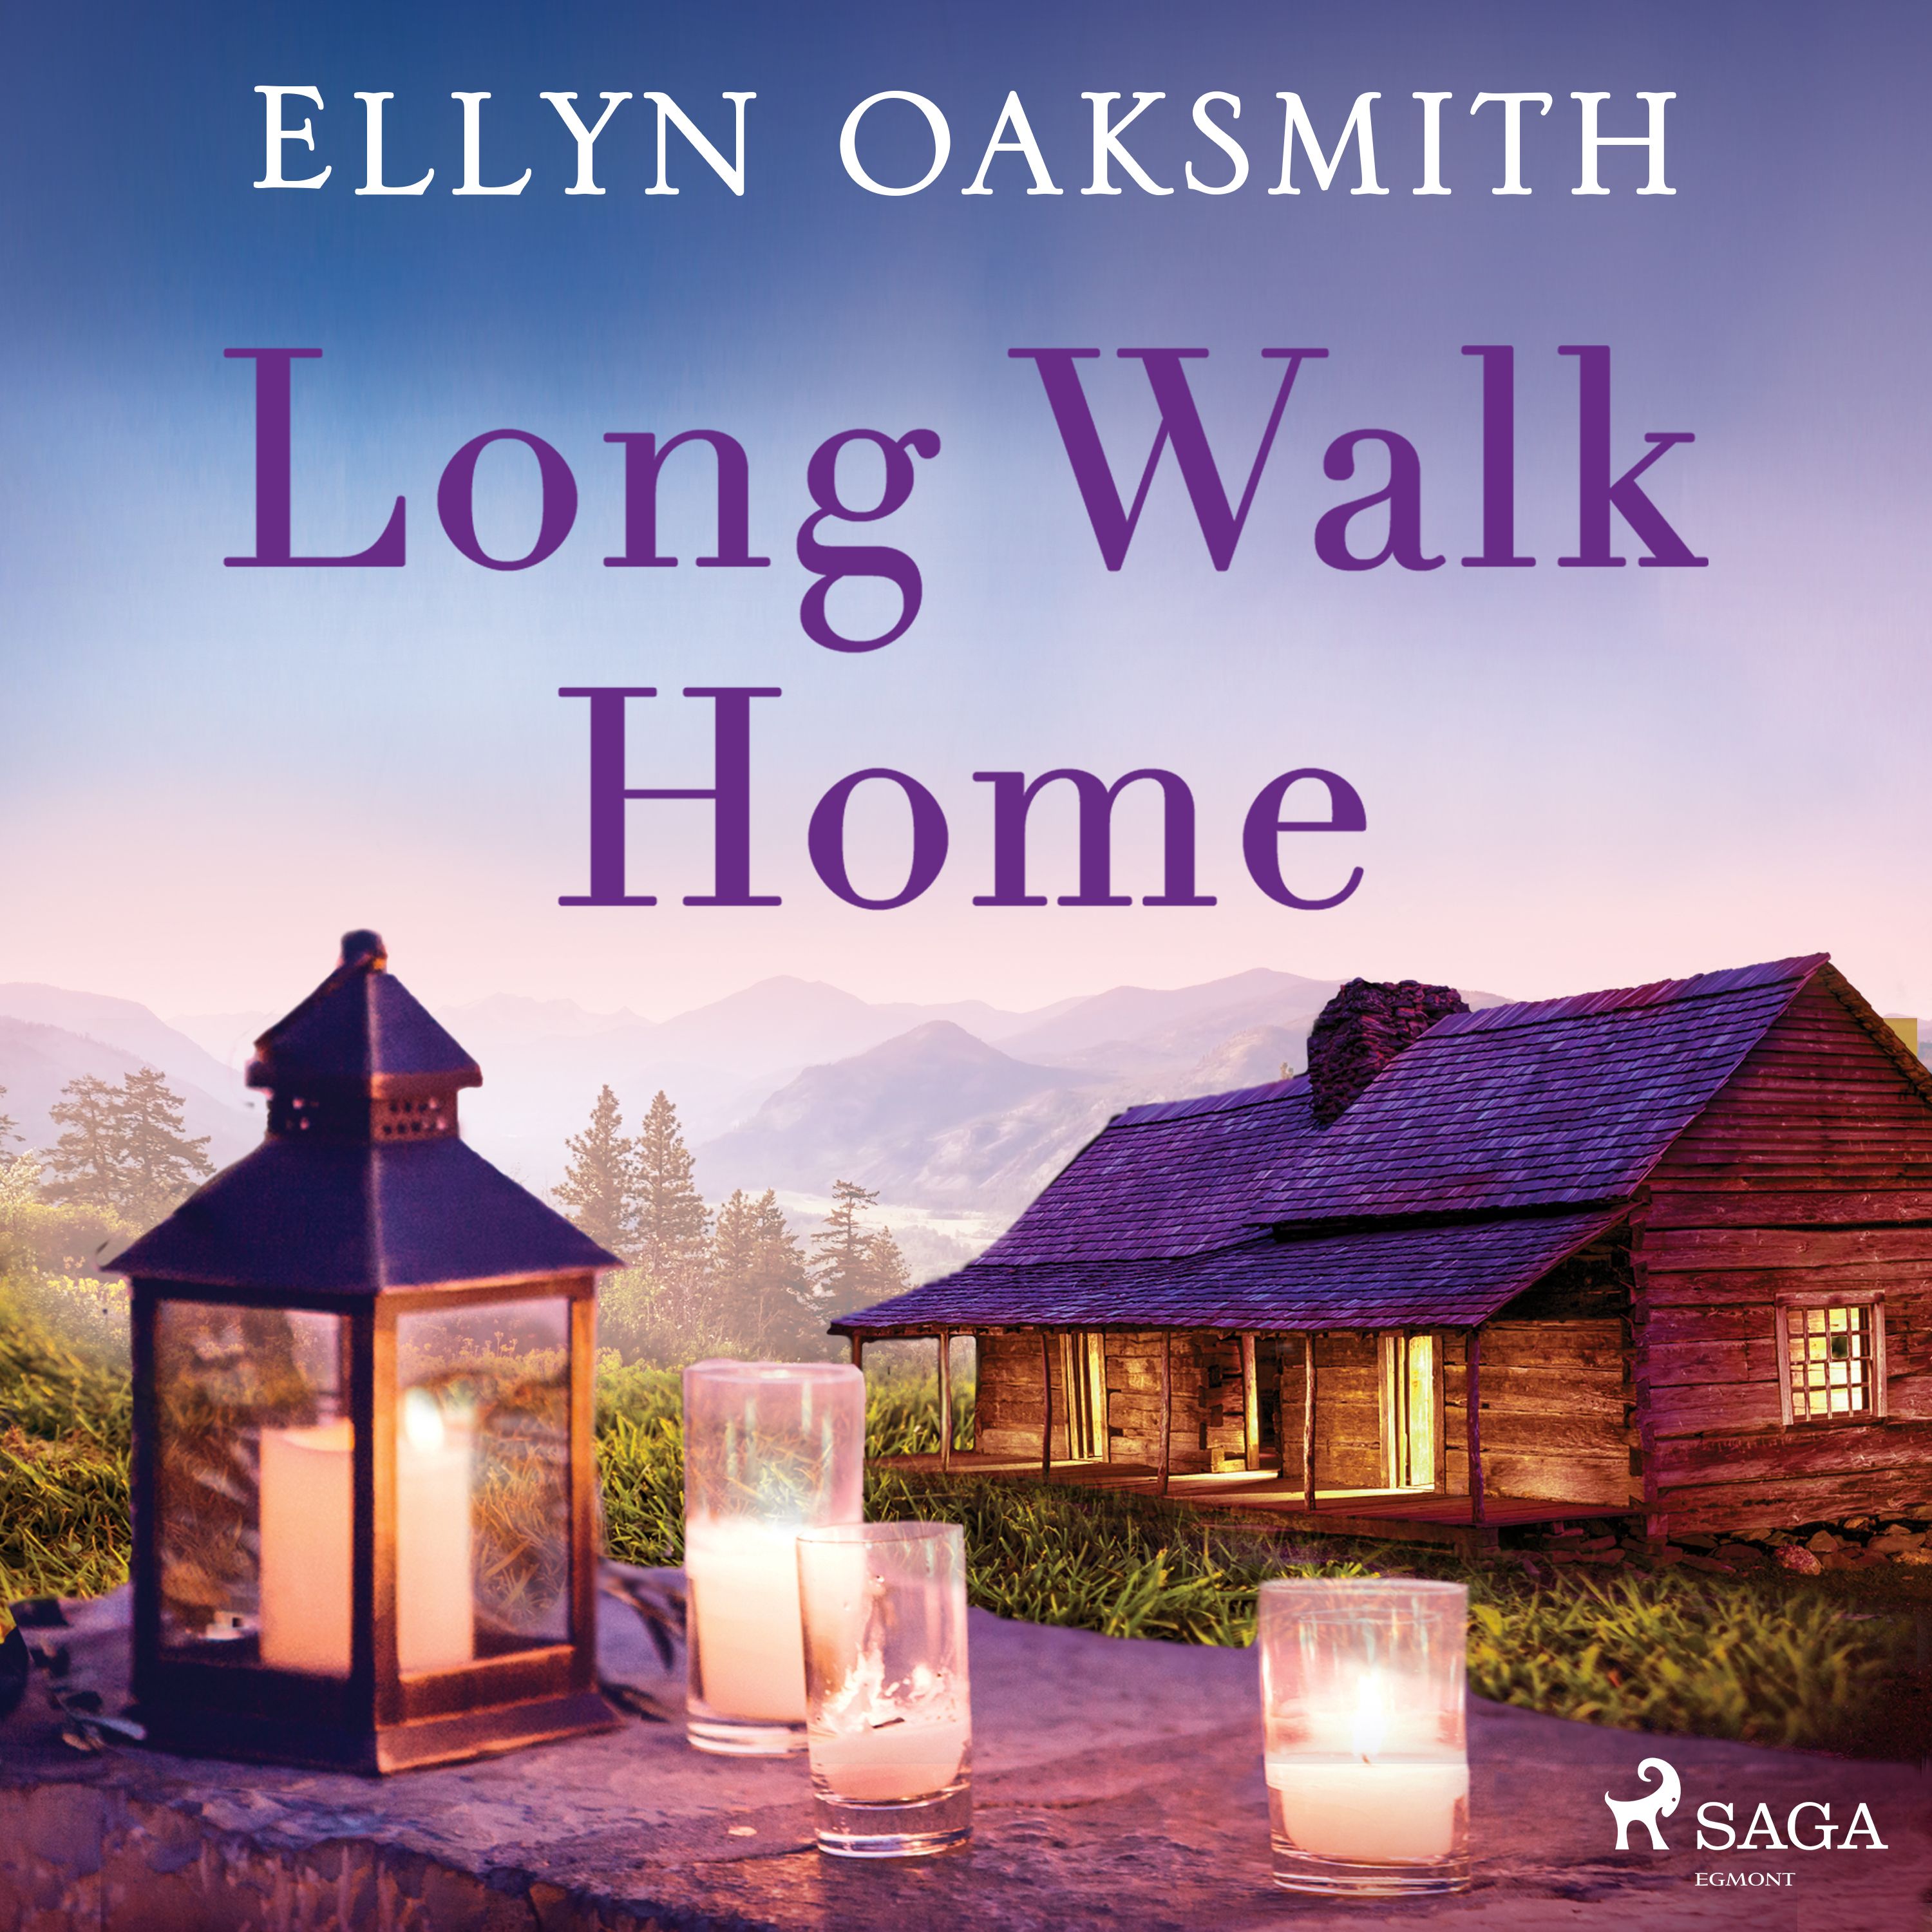 Long Walk Home, lydbog af Ellyn Oaksmith